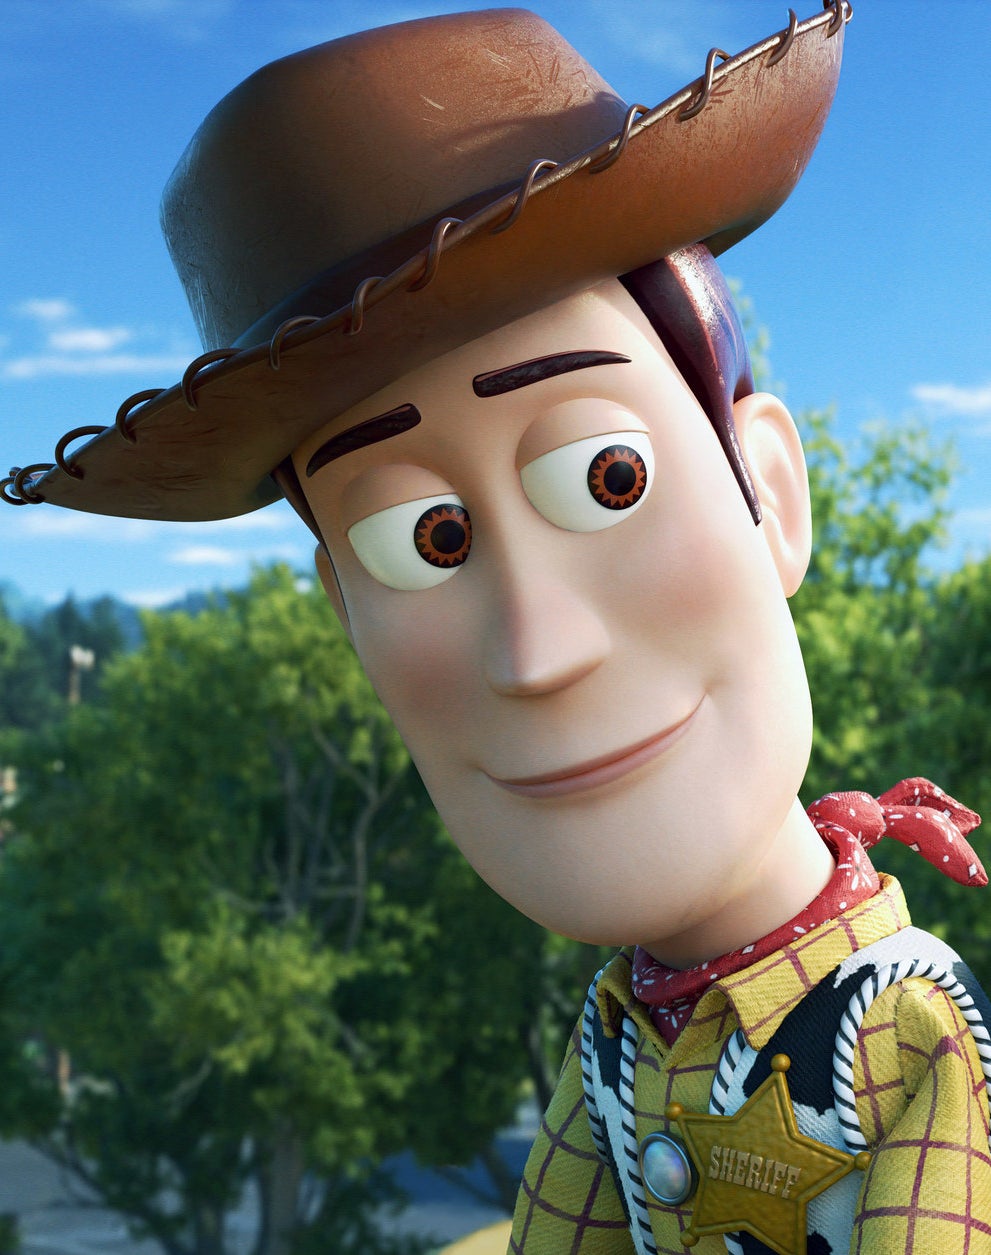 Sheriff Woody wearing his hat